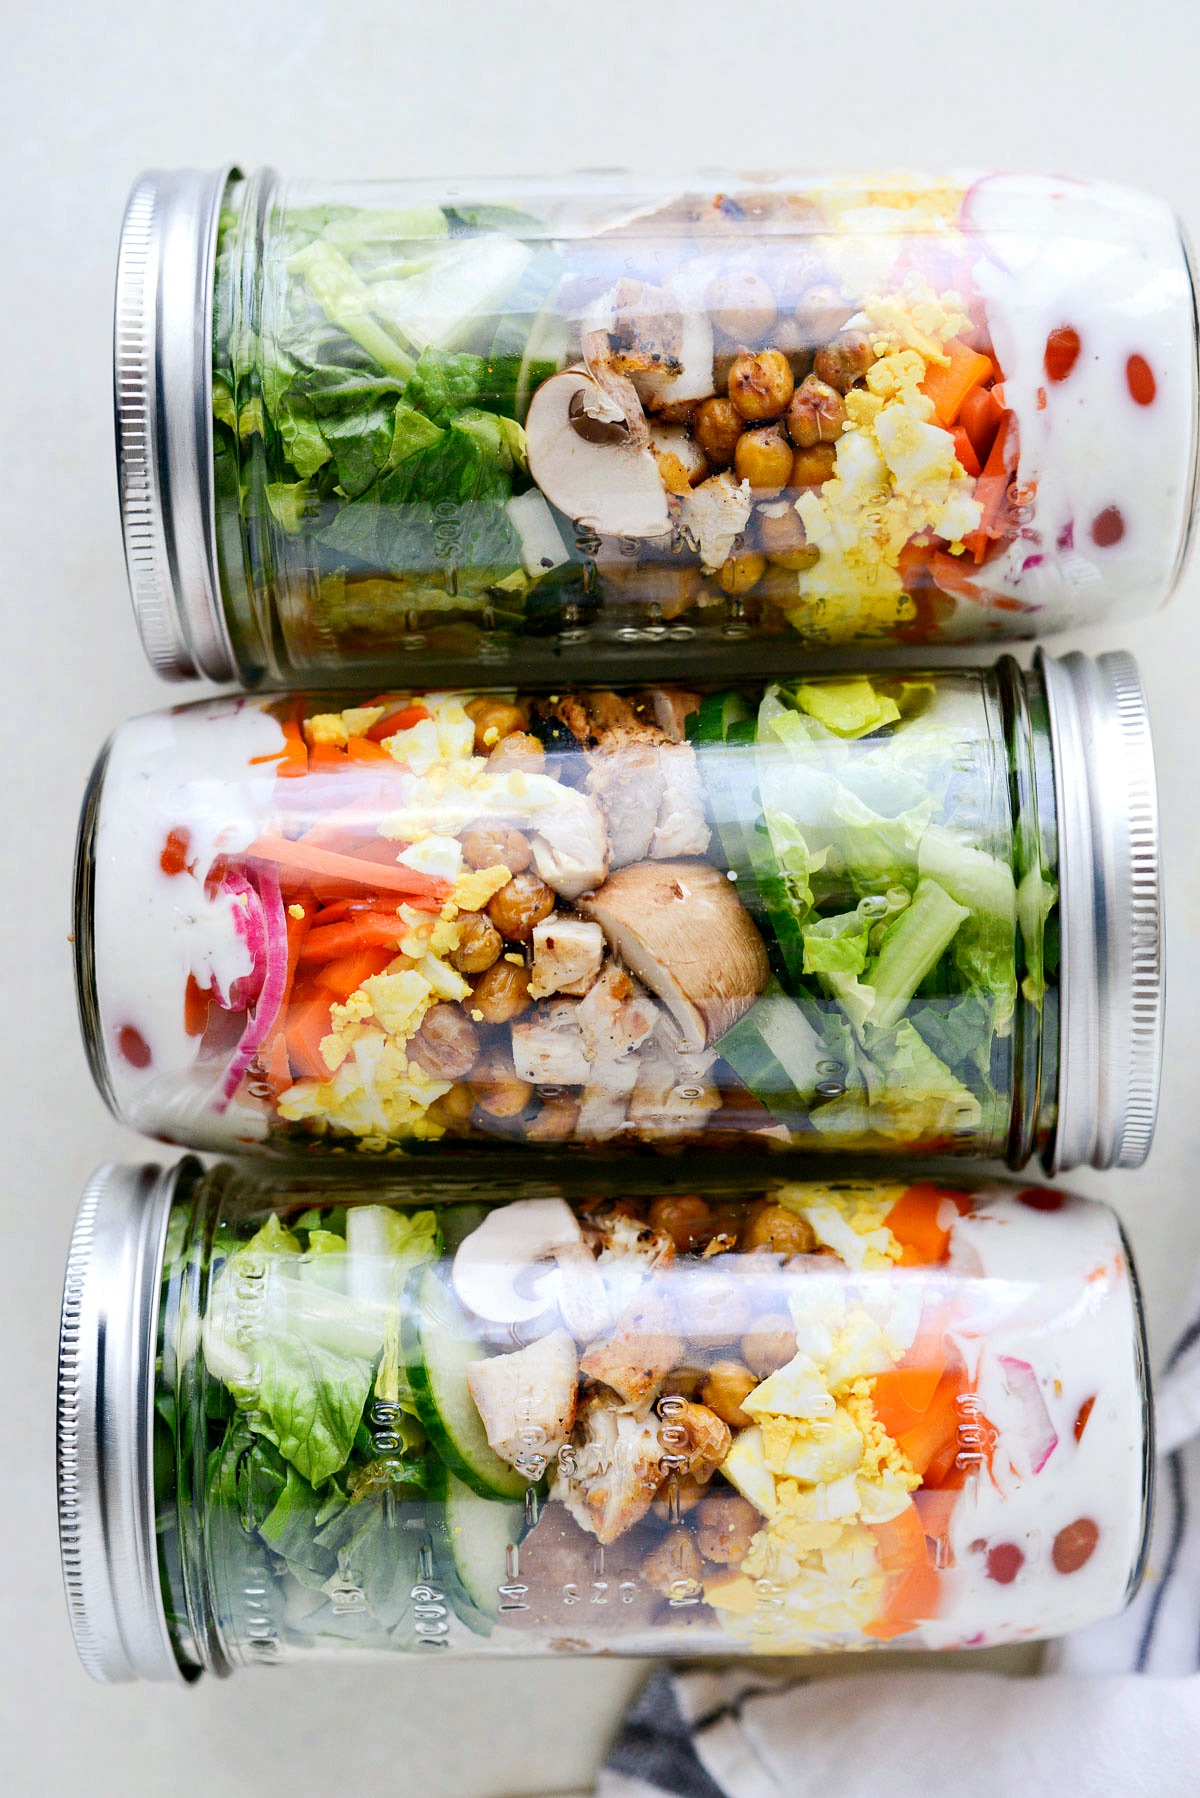 https://www.simplyscratch.com/wp-content/uploads/2020/04/Everyday-Mason-Jar-Salad-l-SimplyScratch.com-mealprep-salad-masonjar-jarsalad-lowpoint-ww-lowfat-12.jpg